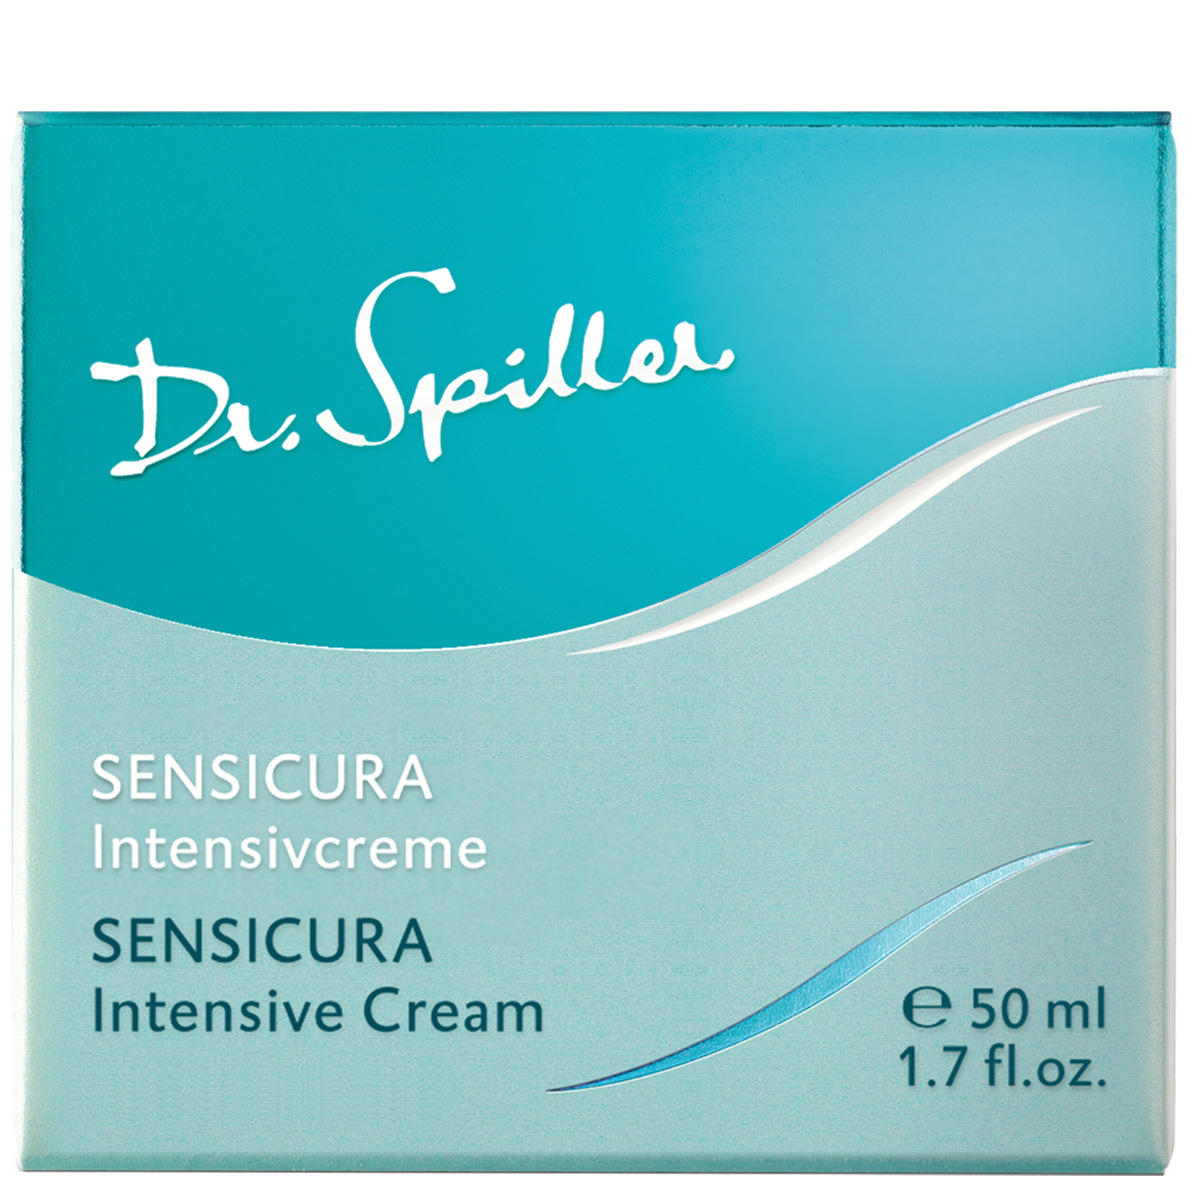 Dr. Spiller Biomimetic SkinCare SENSICURA Intensivcreme 50 ml - 3